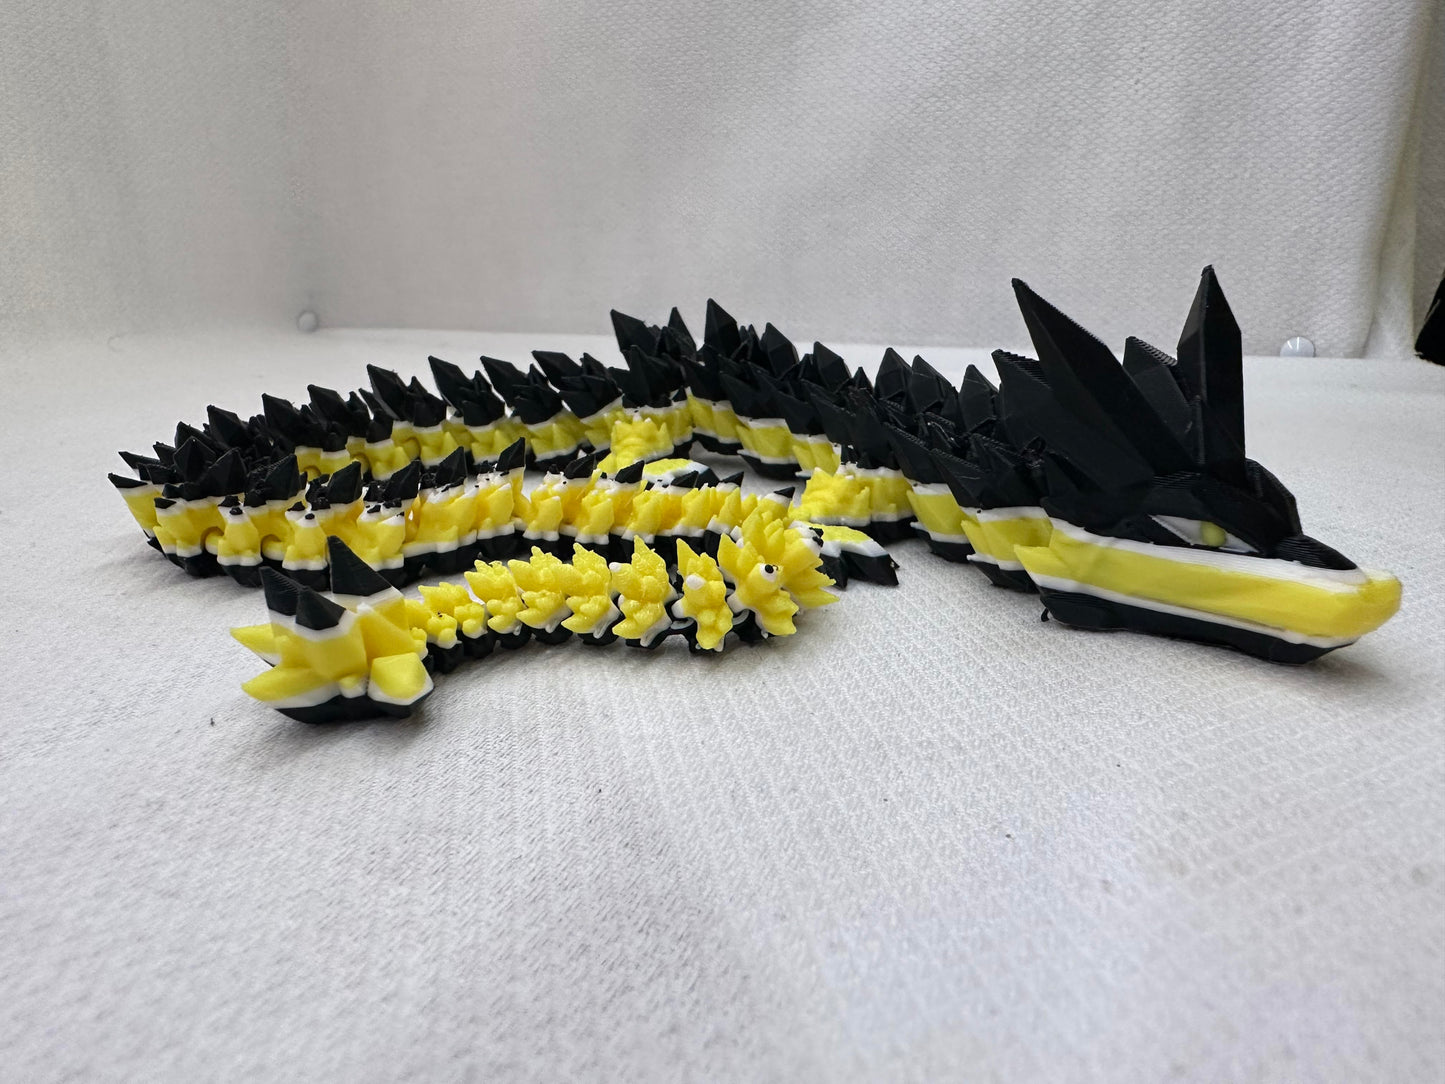 3D Printed Articulating Crystal Dragons Fidget